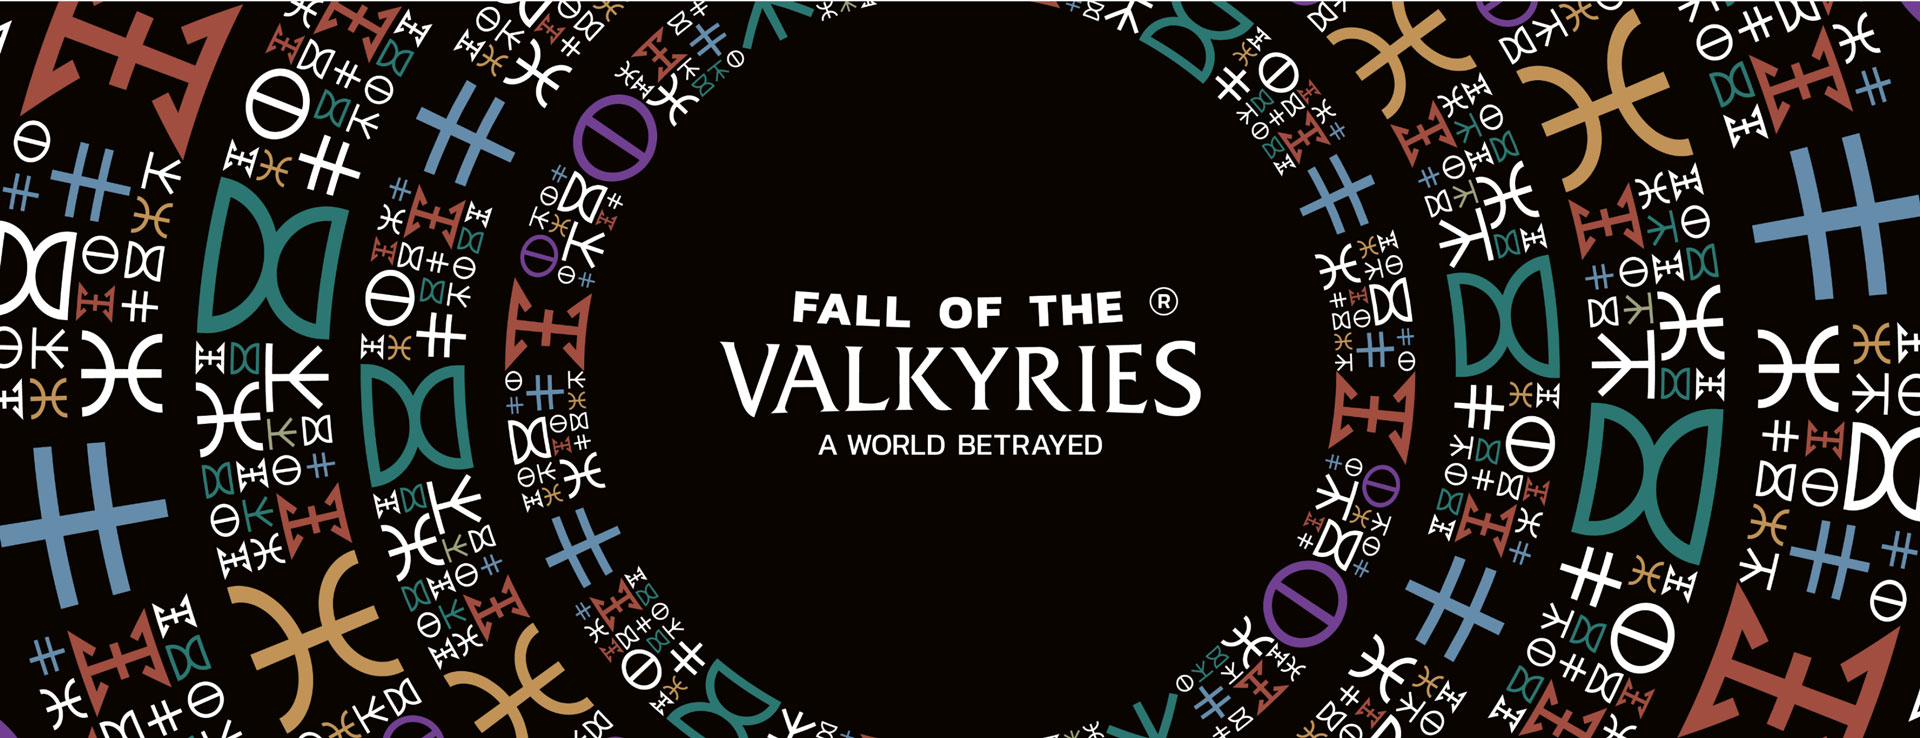 VALKYRIES  - NYX Awards Winner 